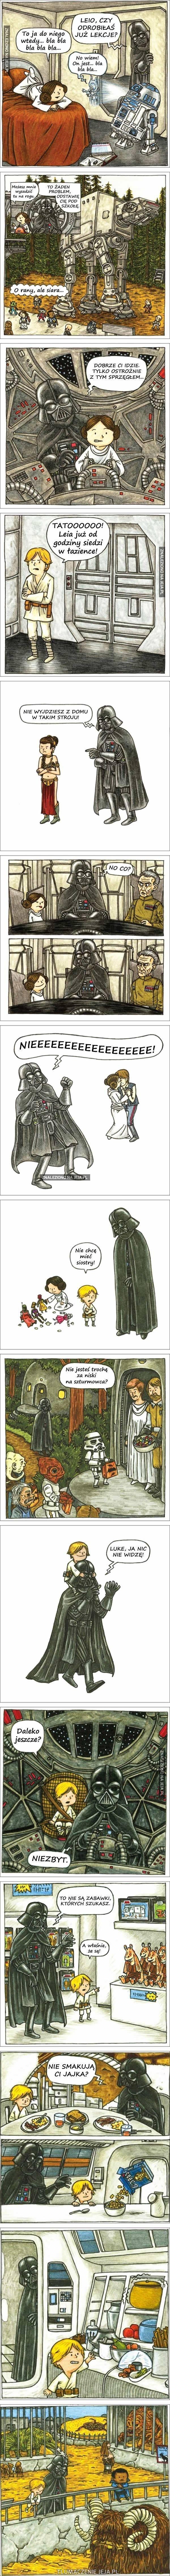 Gdyby Lord Vader był przykładnym ojcem